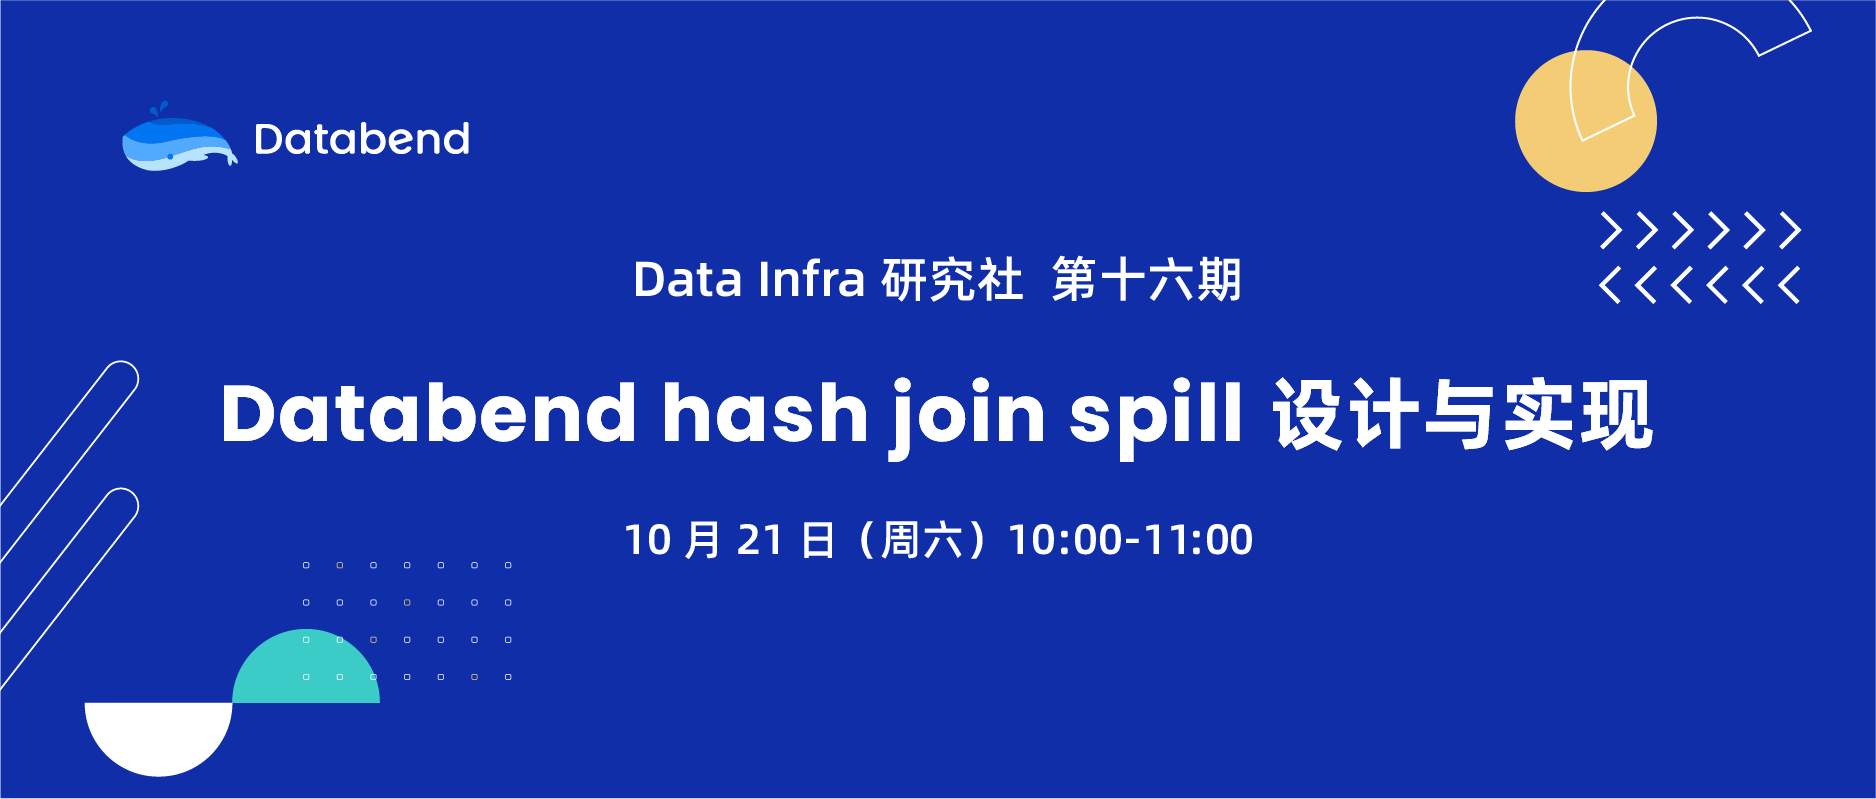 Databend hash join spill 设计与实现 | Data Infra 第 16 期